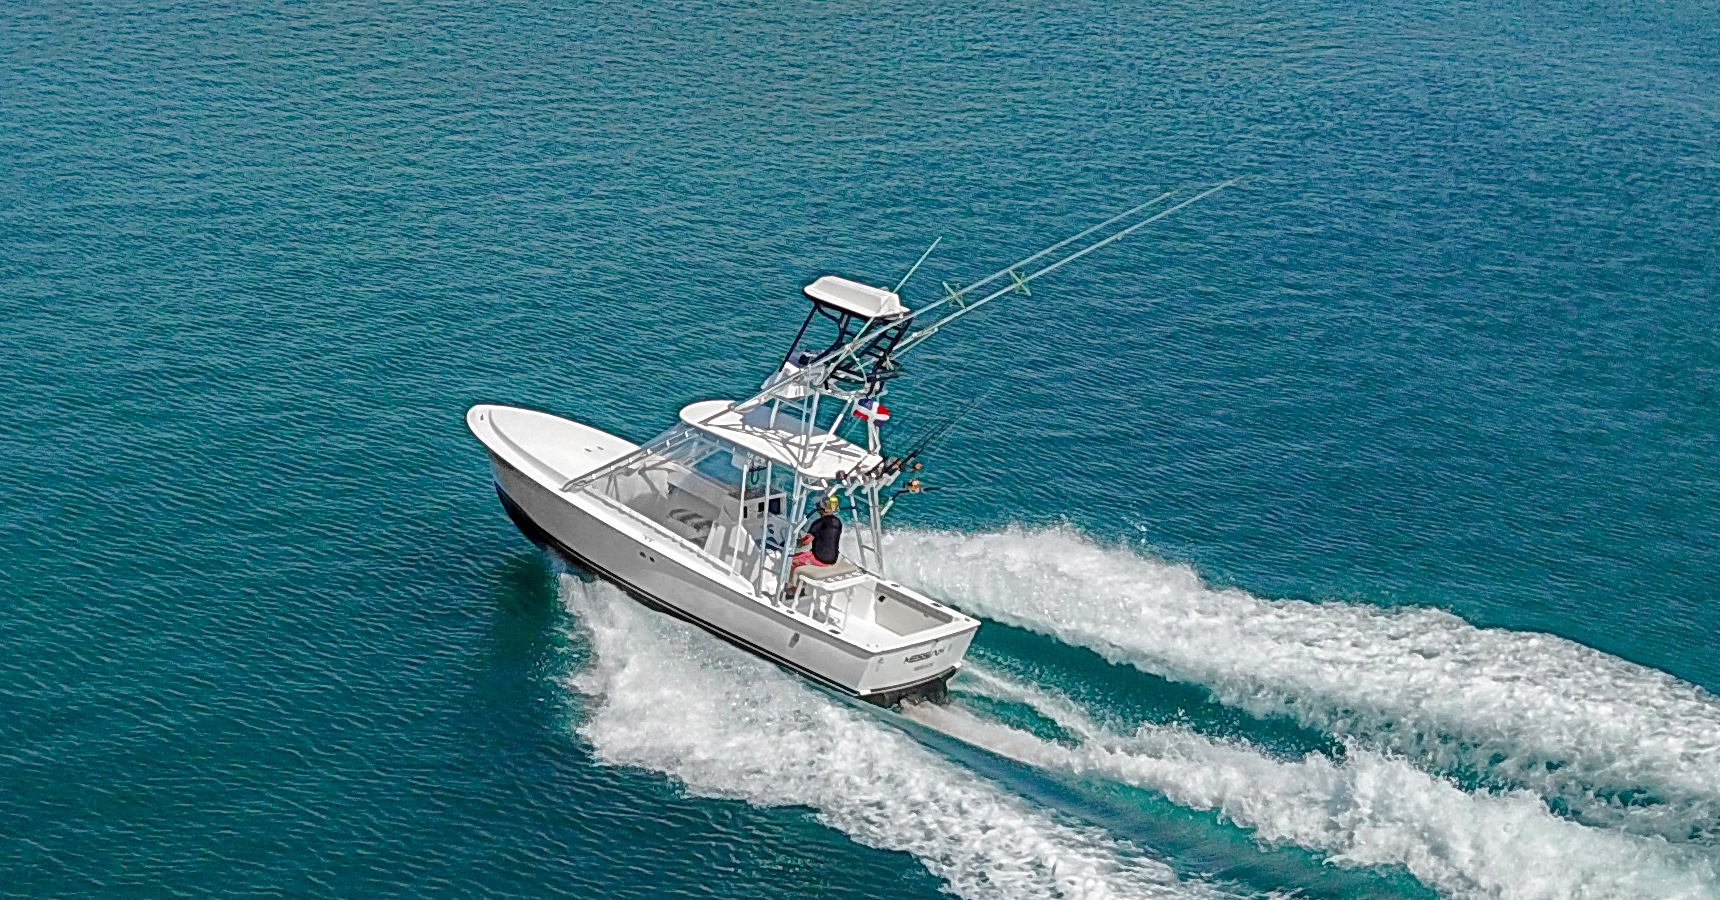 botes - sport fishing boat, strike 26' 
motor cumins 6bta 370 hp
diesel 
bote de pesca 